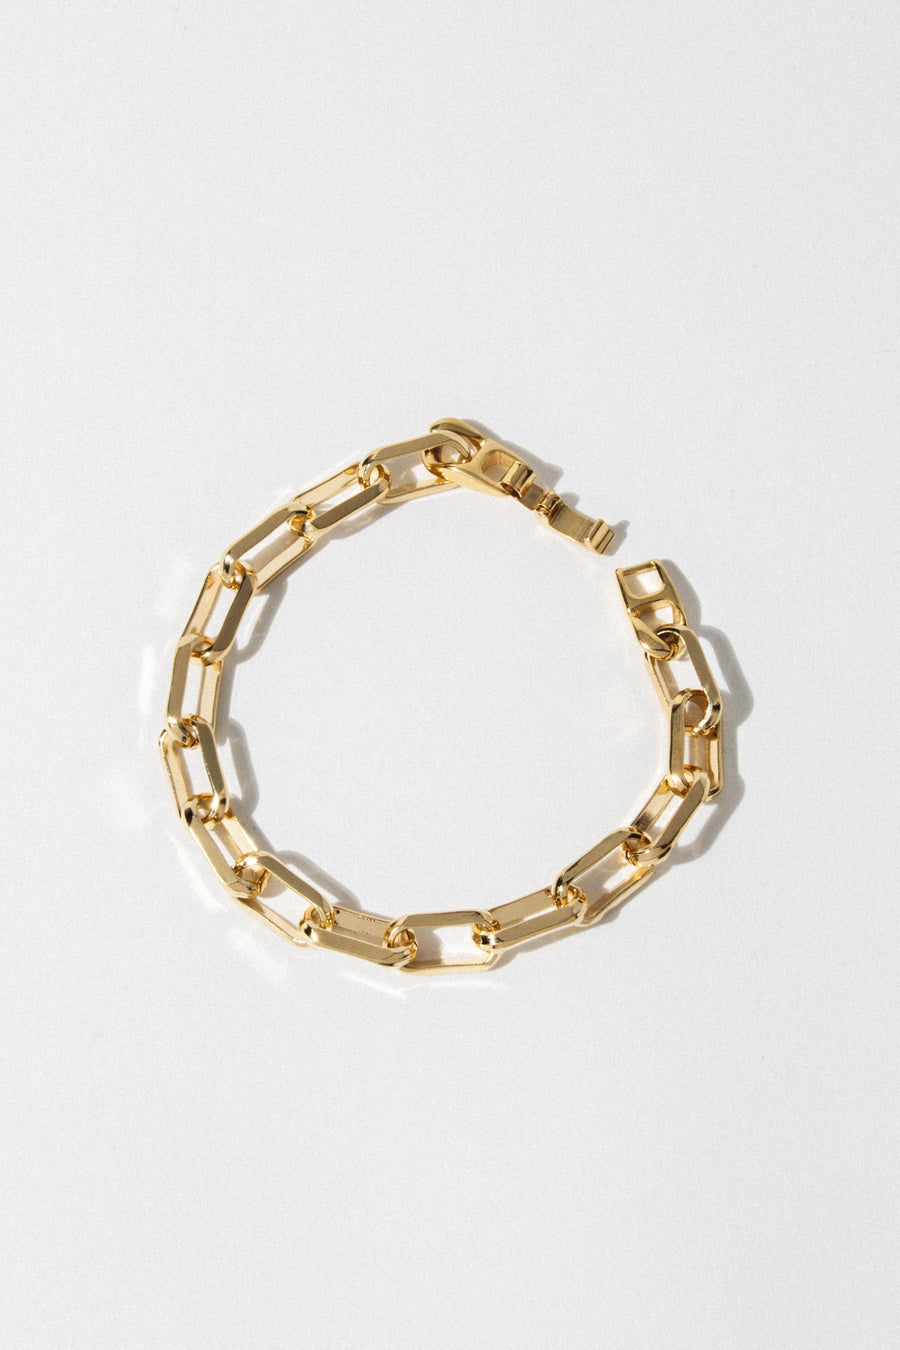 Goddess Jewelry Gold Spellbound Bracelet